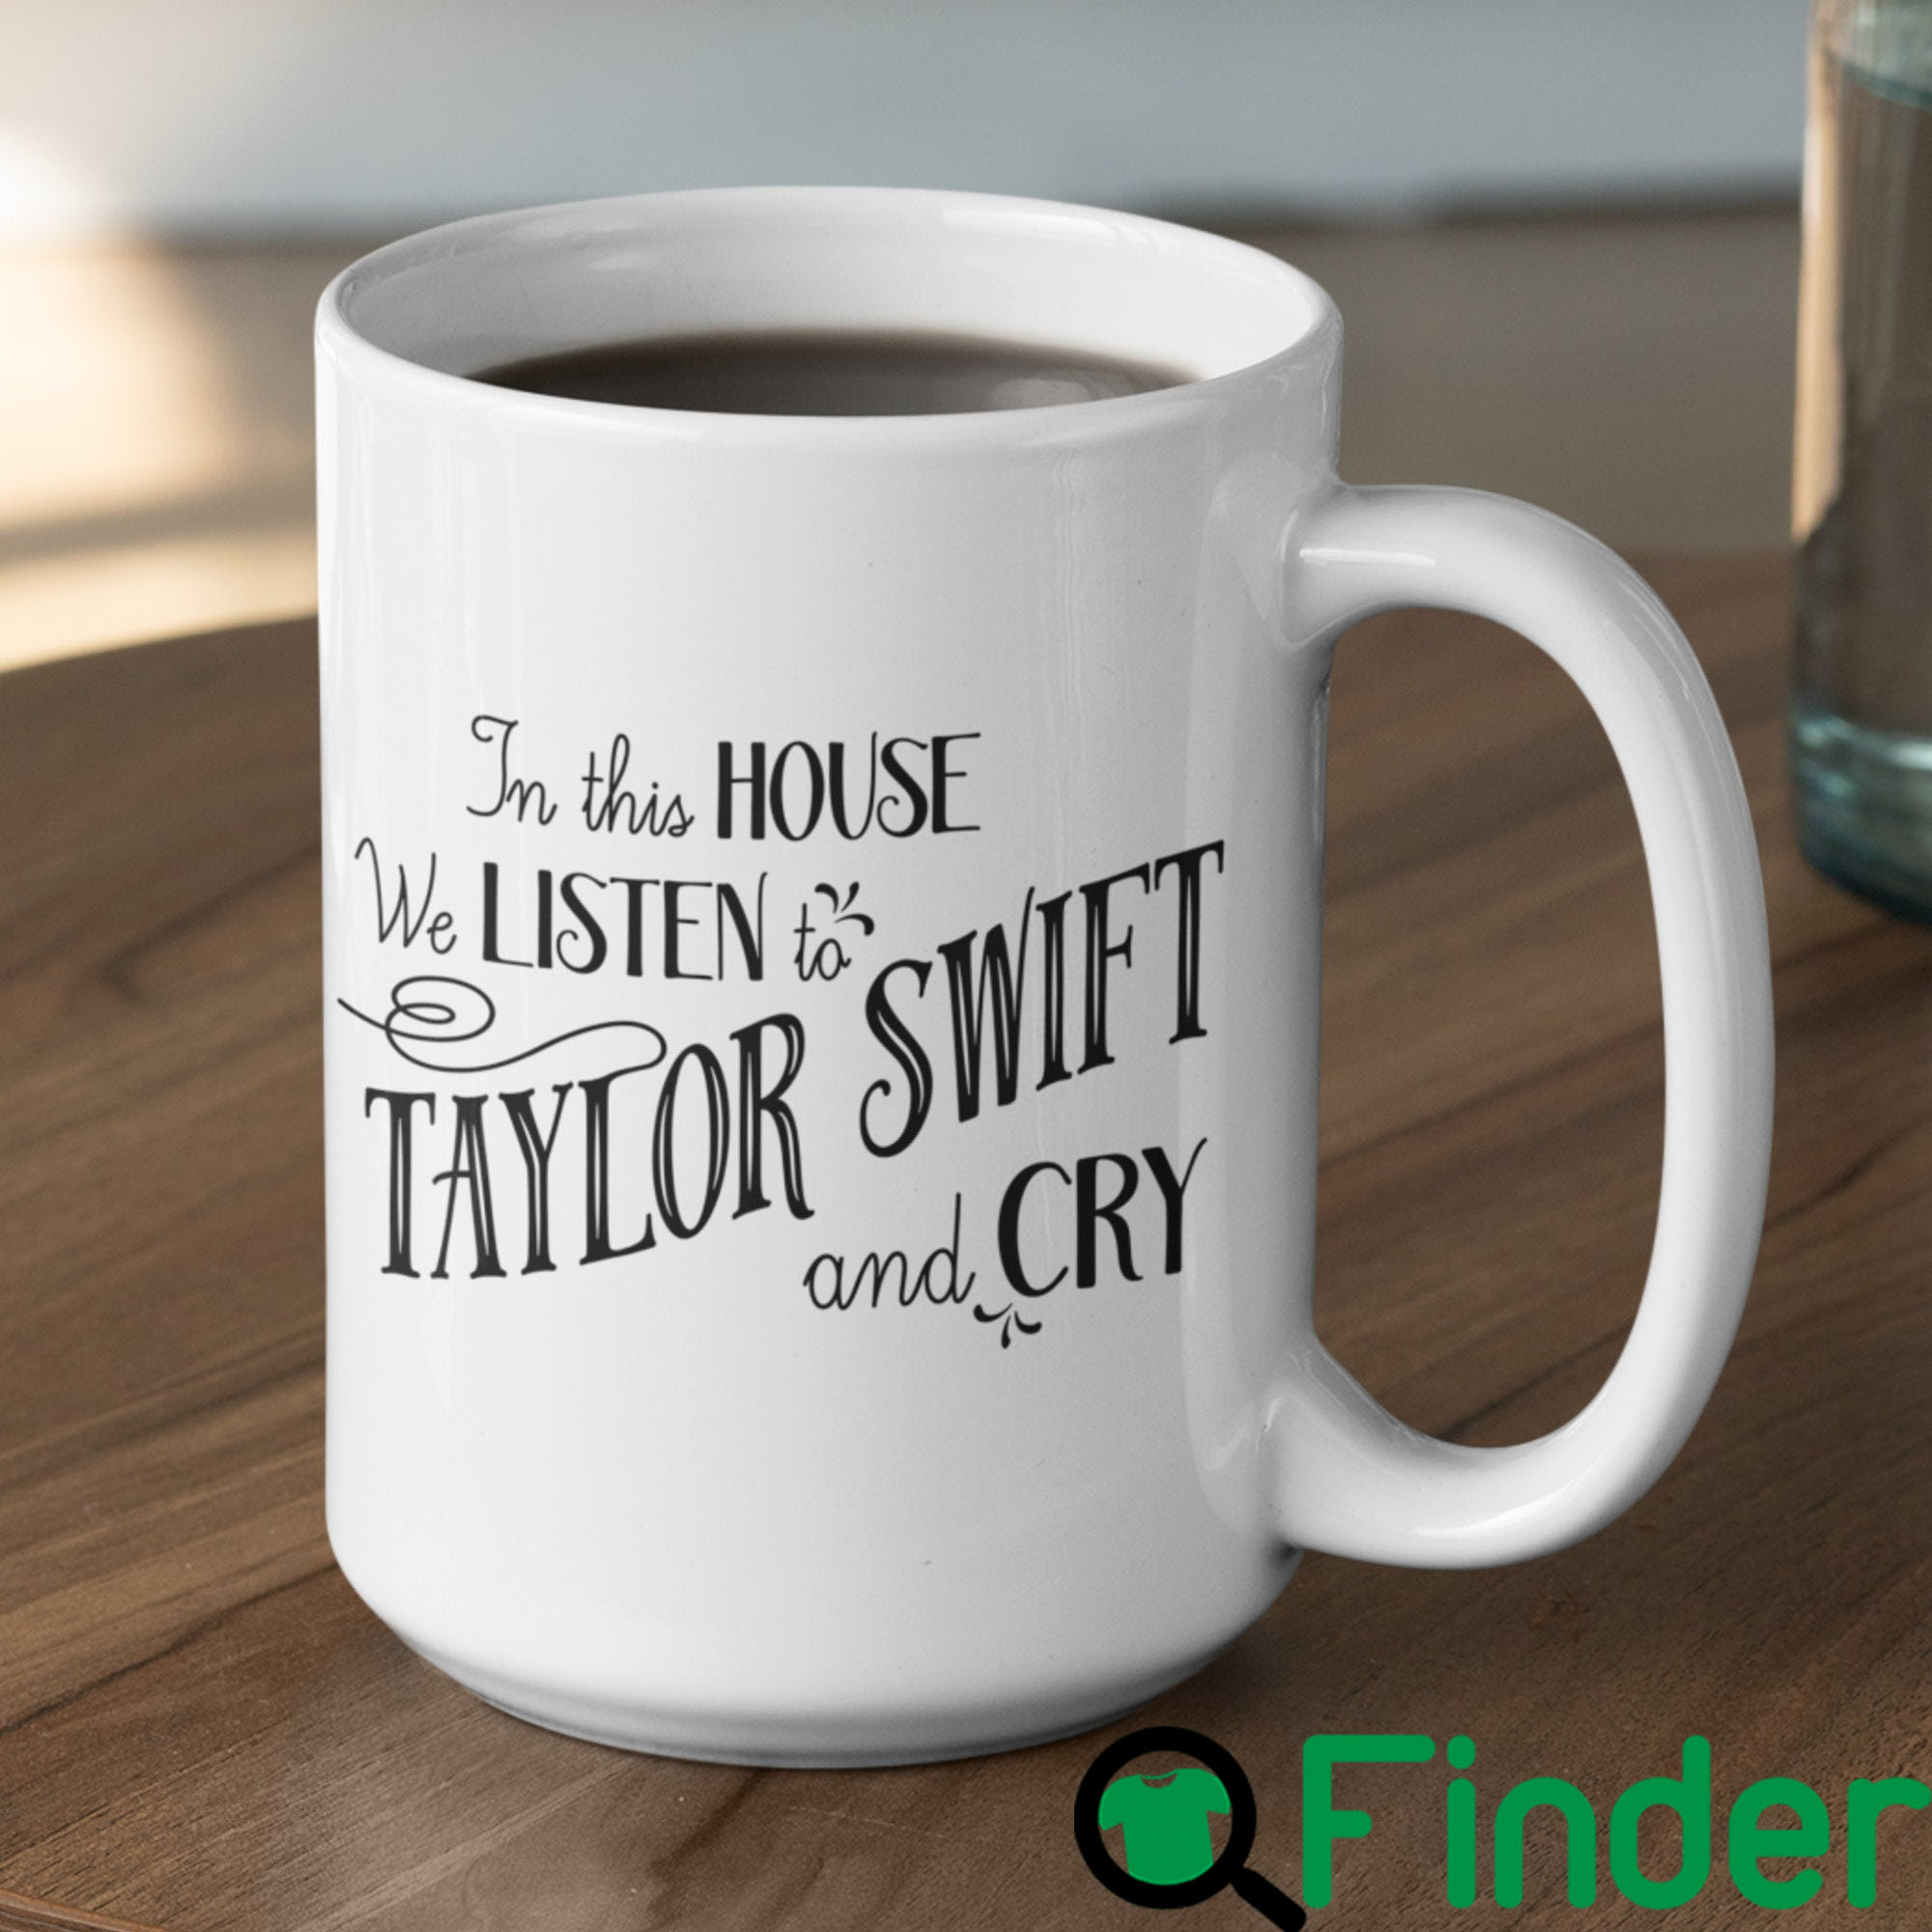 https://q-finder.com/wp-content/uploads/2021/12/Taylor-Swift-Listen-And-Cry-Taylors-Version-Mug.jpg